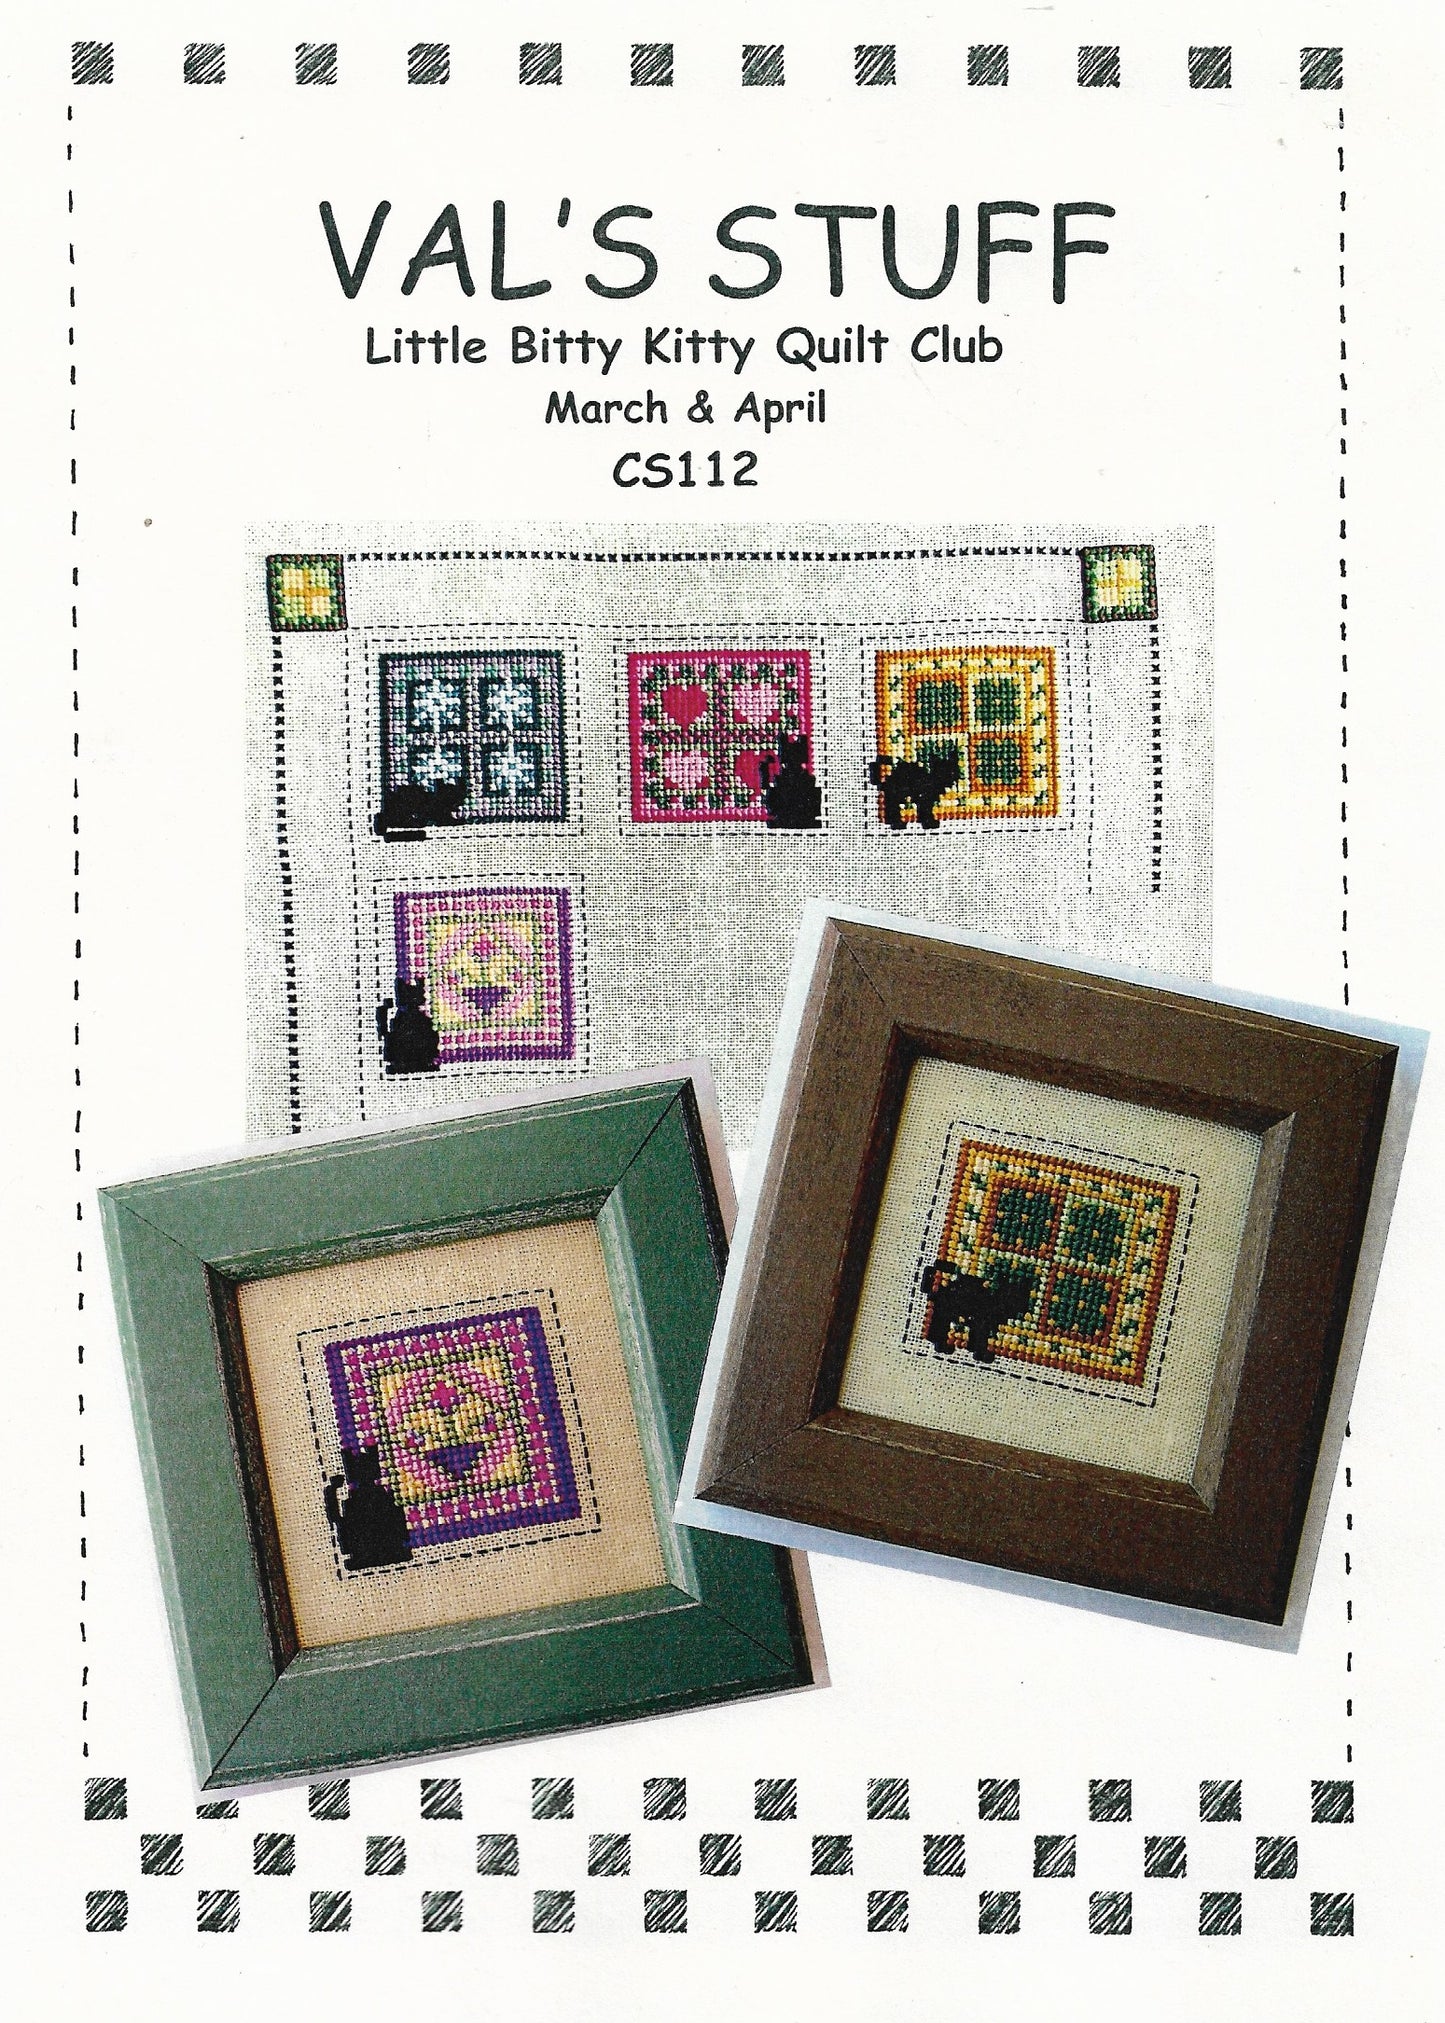 Val's Stuff Little Bitty Kitty Quilt Club March & April cross stitch pattern